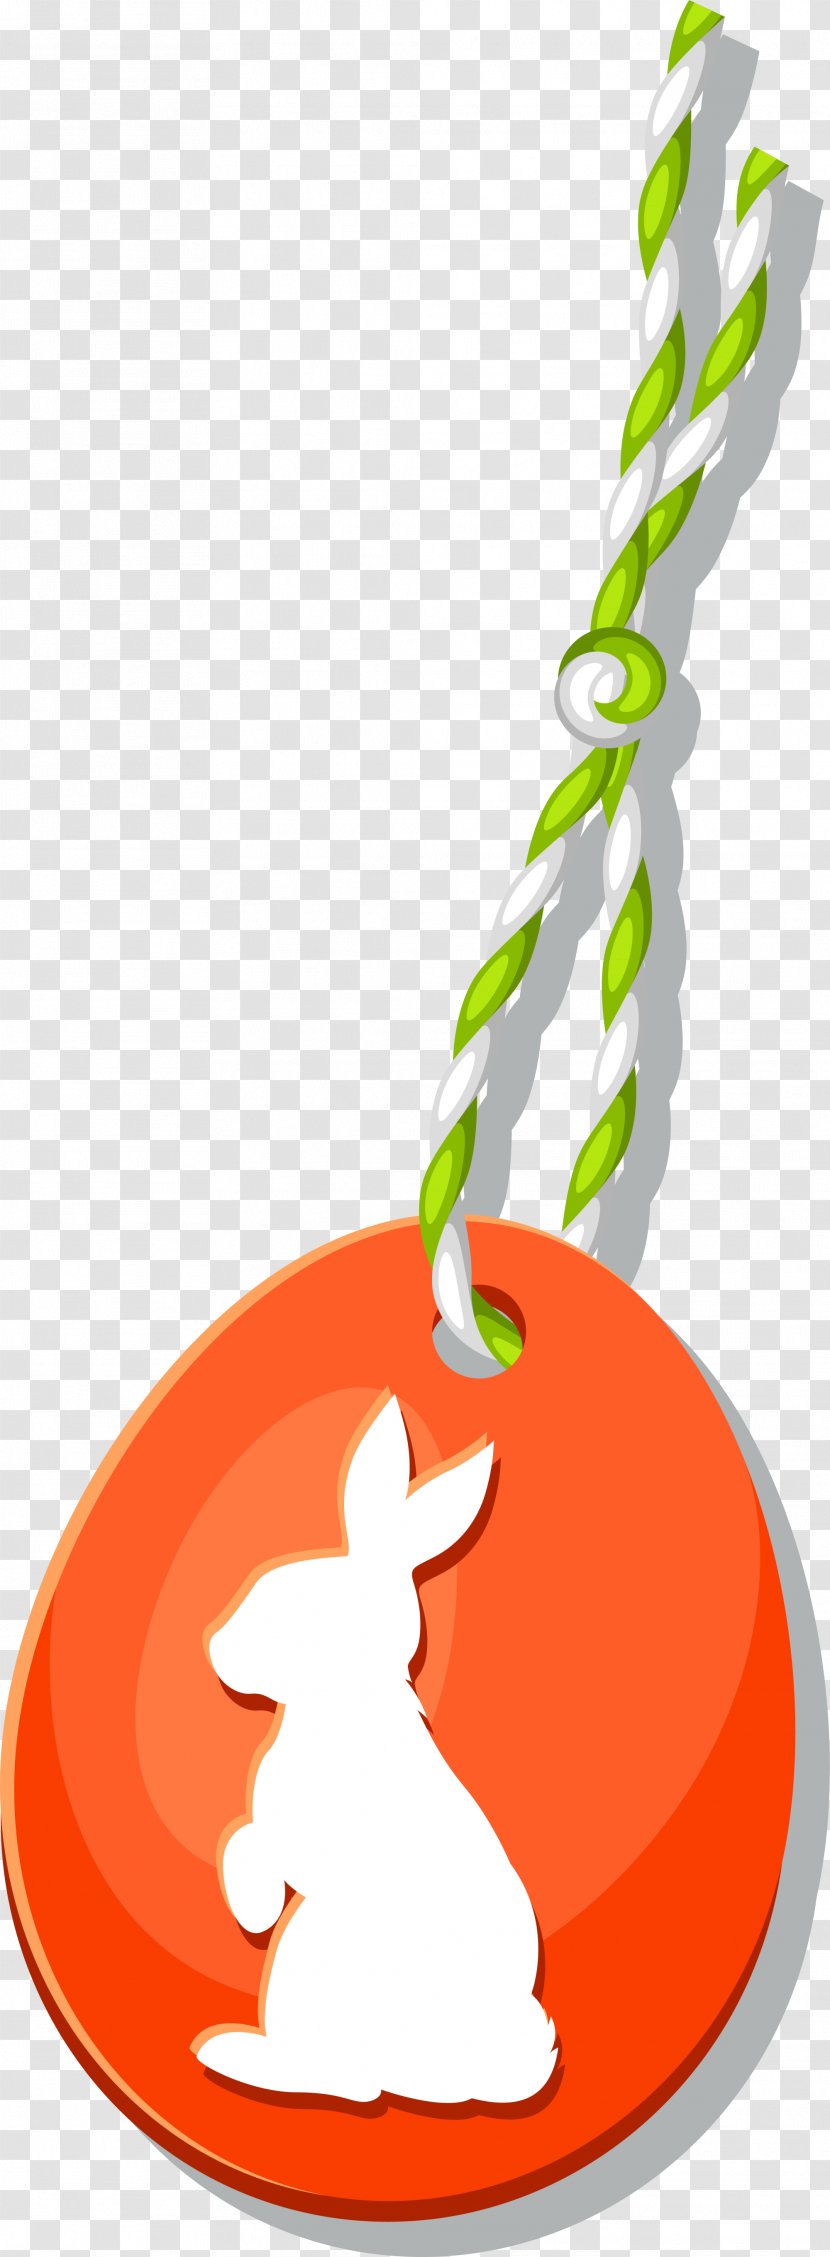 Orange Clip Art - Plant - Rabbit Ornaments Transparent PNG